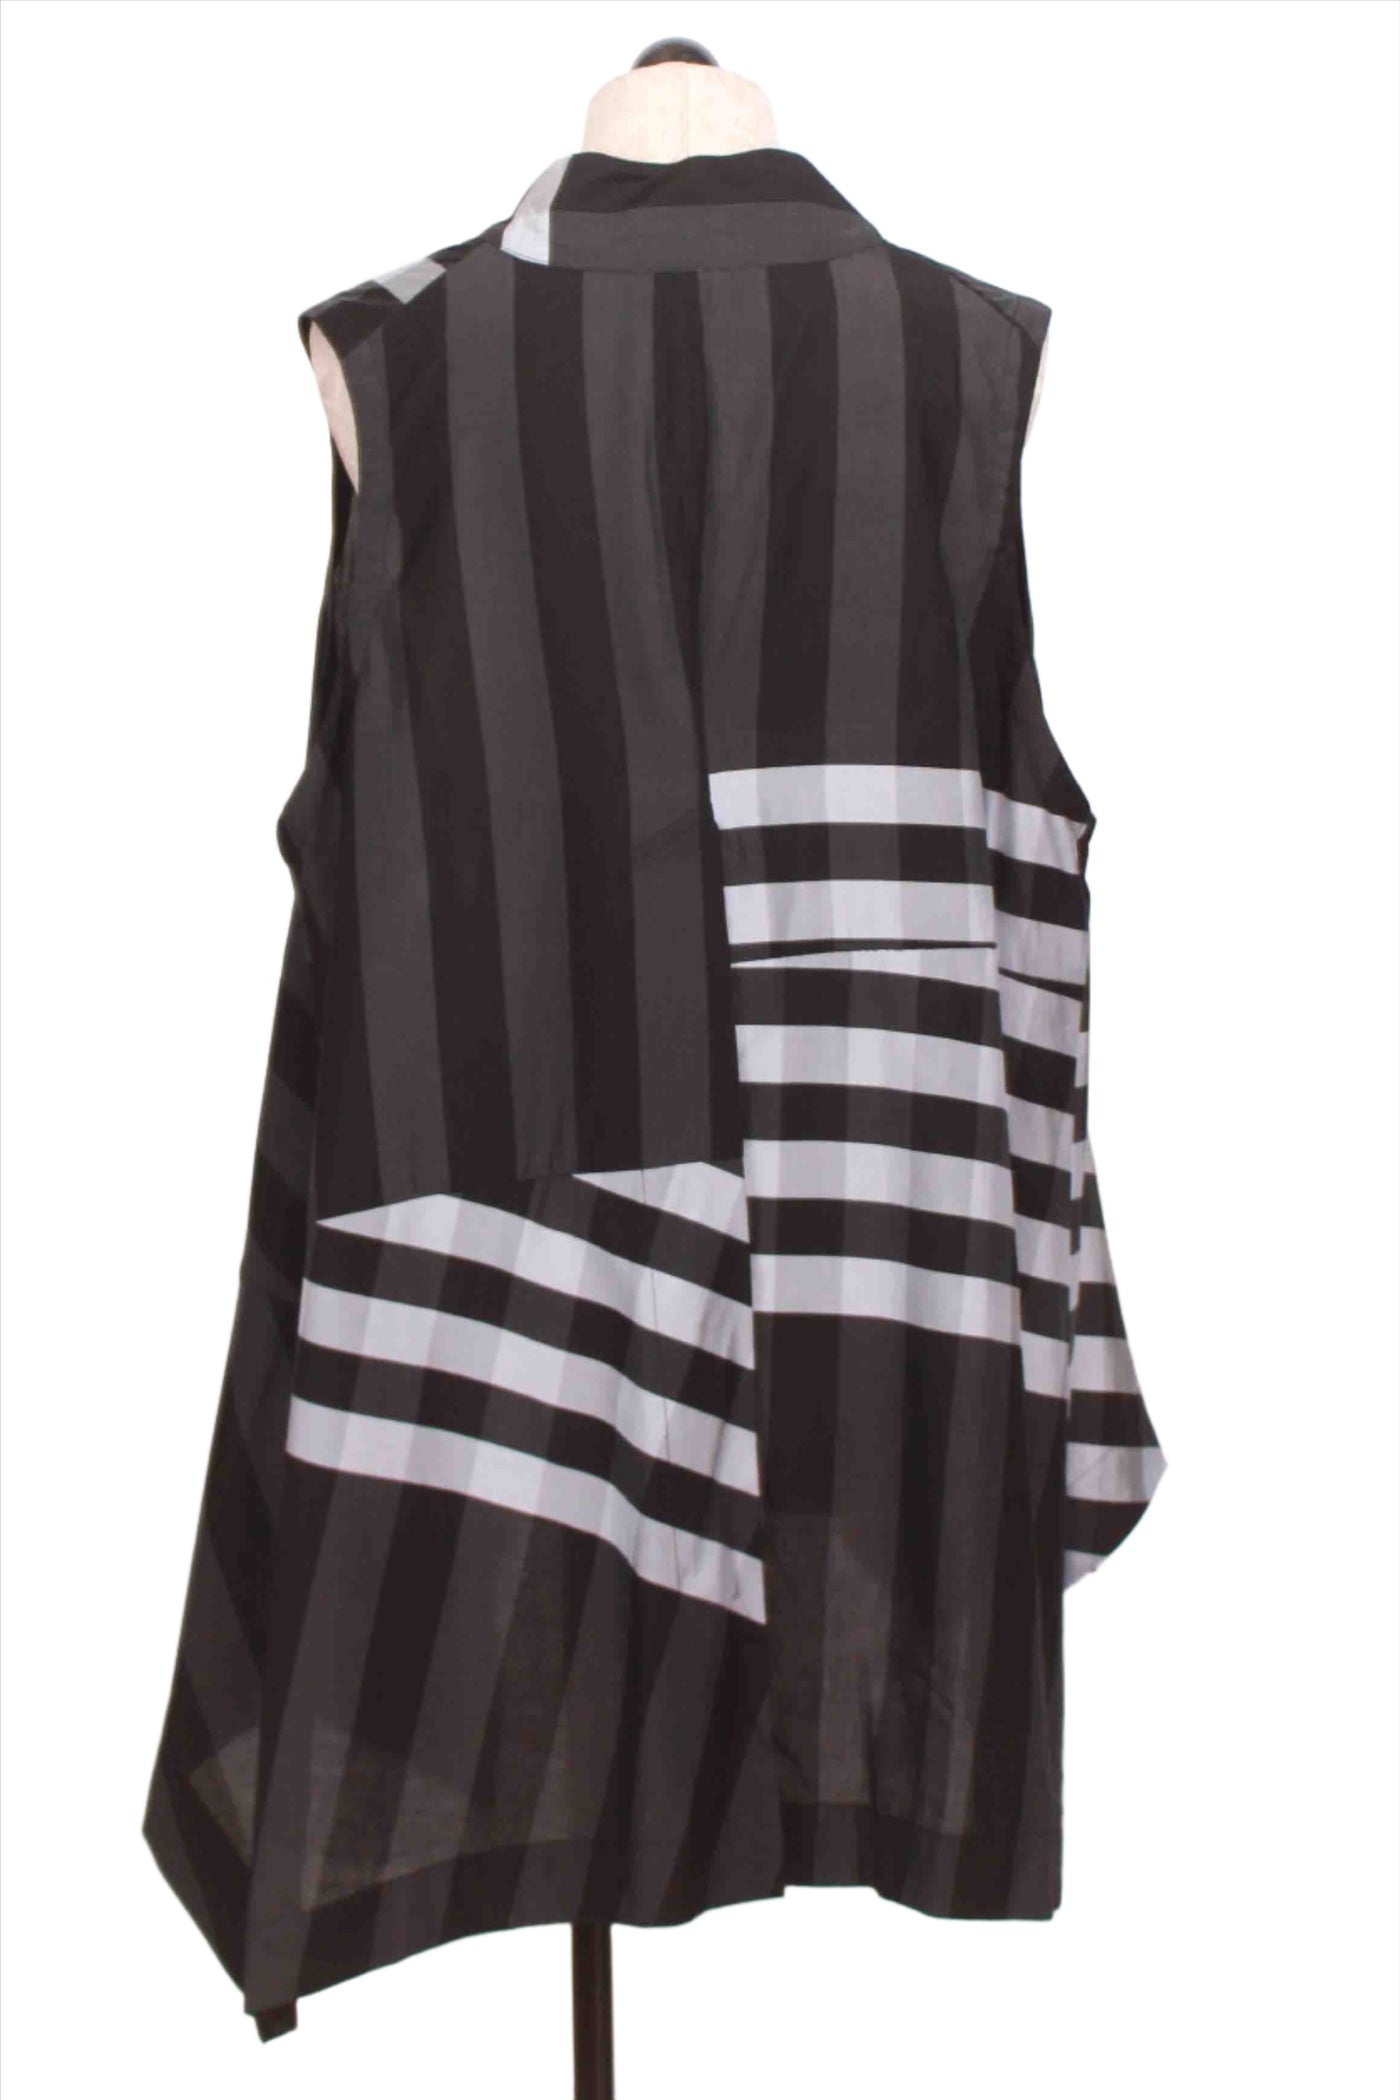 back view of Black/White/Grey Hi Lo Mixed Plaid and Stripe Taffeta Vest by Moyuru